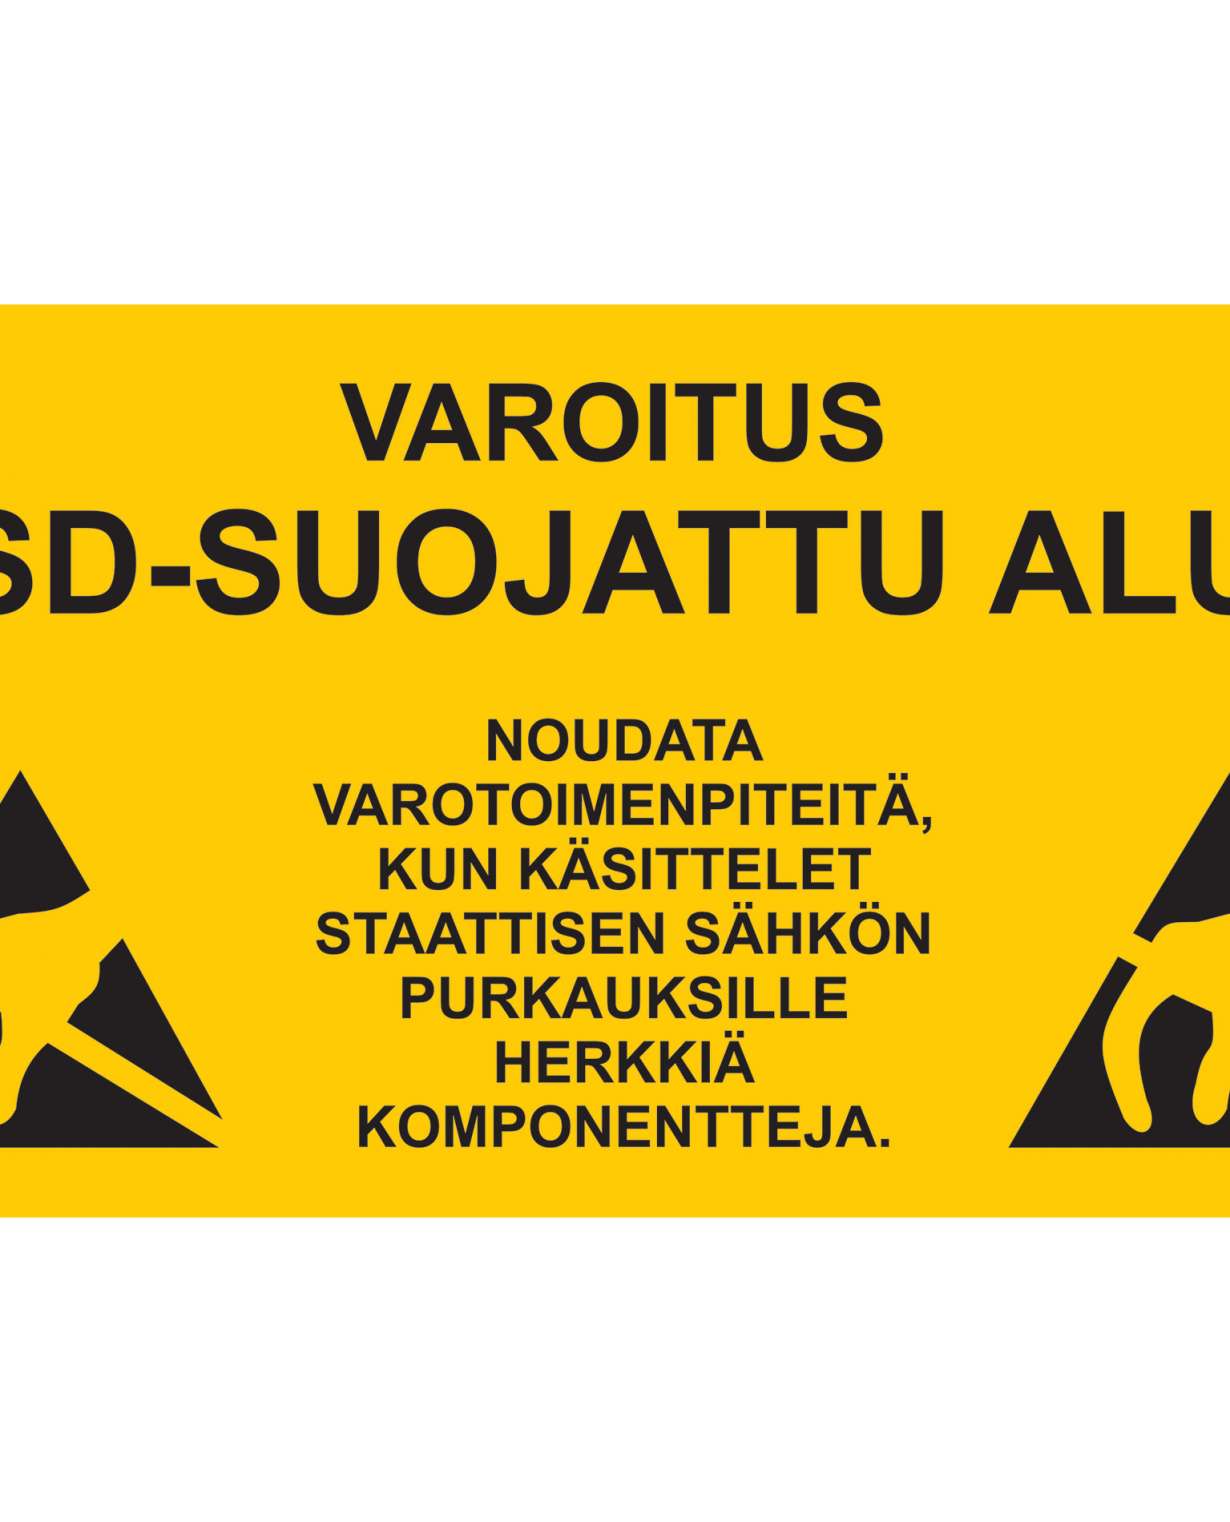 Varoitus Esd-suojattu alue, Magneetti, 400x200 mm